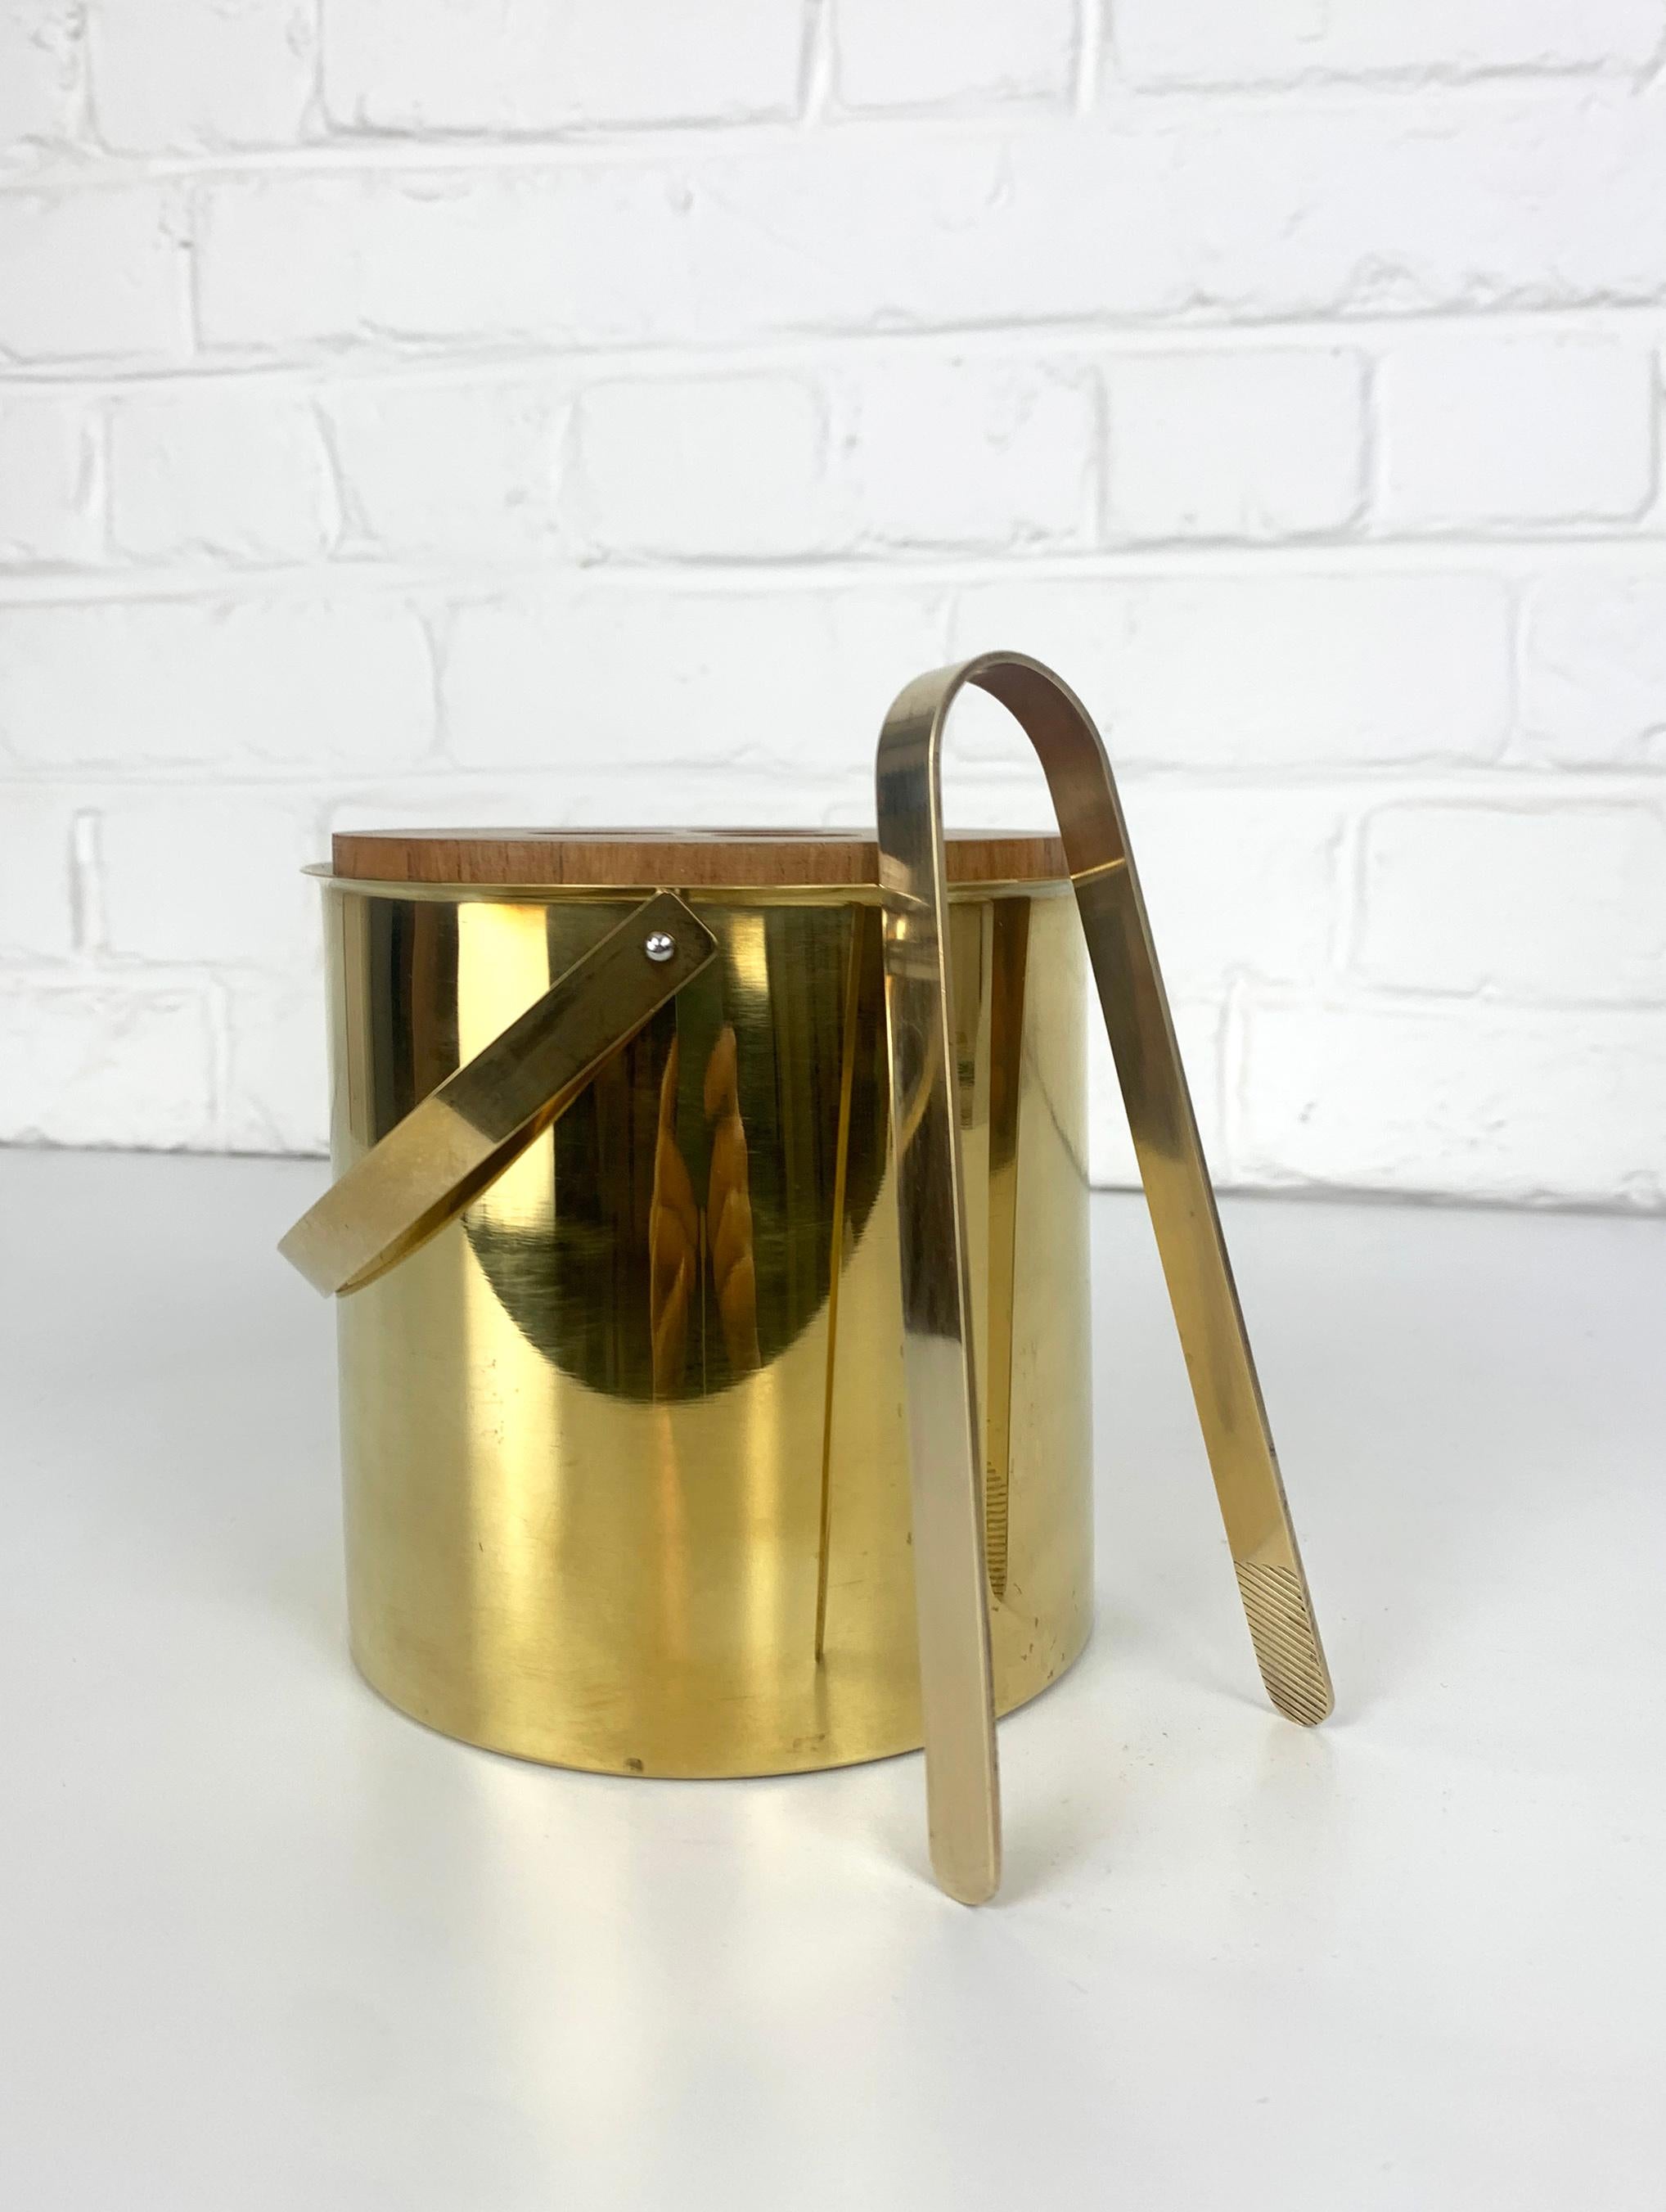 Danish Brass / Teak Ice Bucket & Ice Tong by Arne Jacobsen for Stelton, Brassware 1960s For Sale